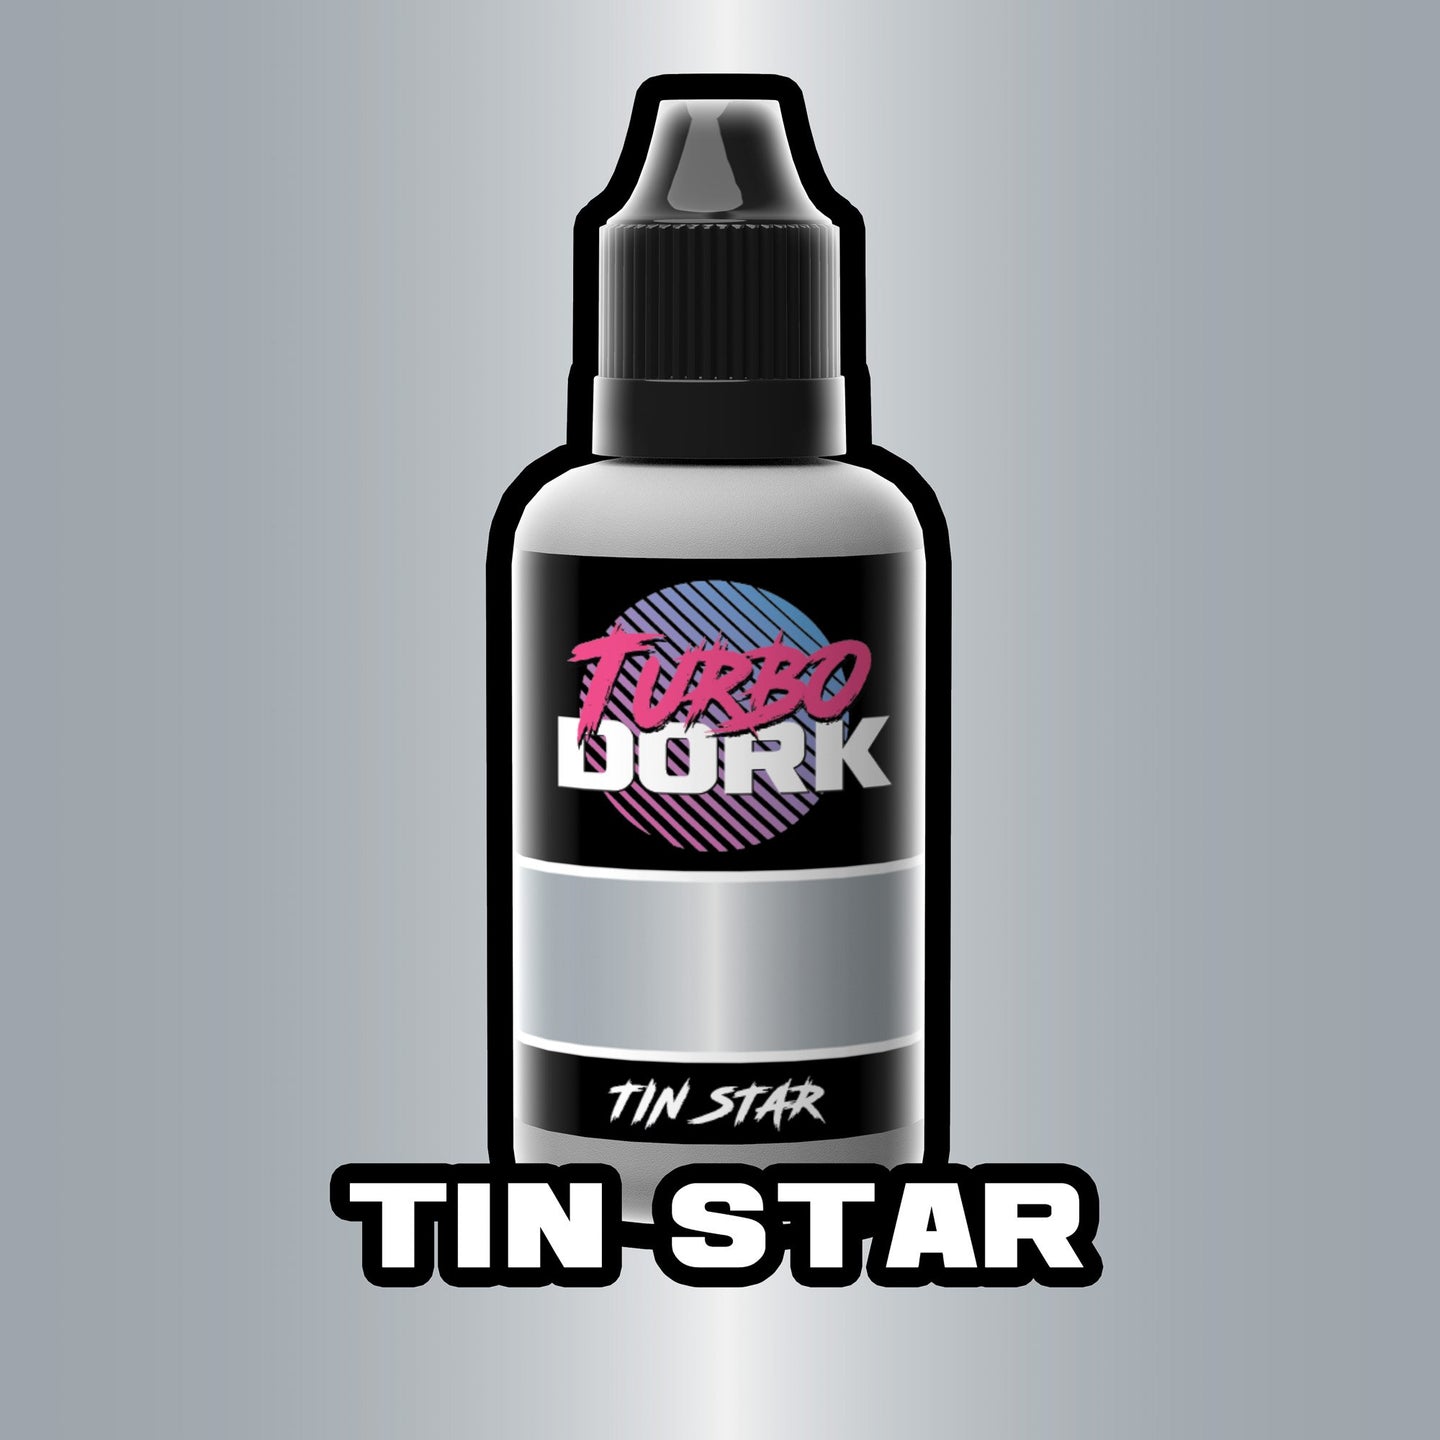 Tin Star Metallic Acrylic Paint 20ml Bottle - Linebreakers